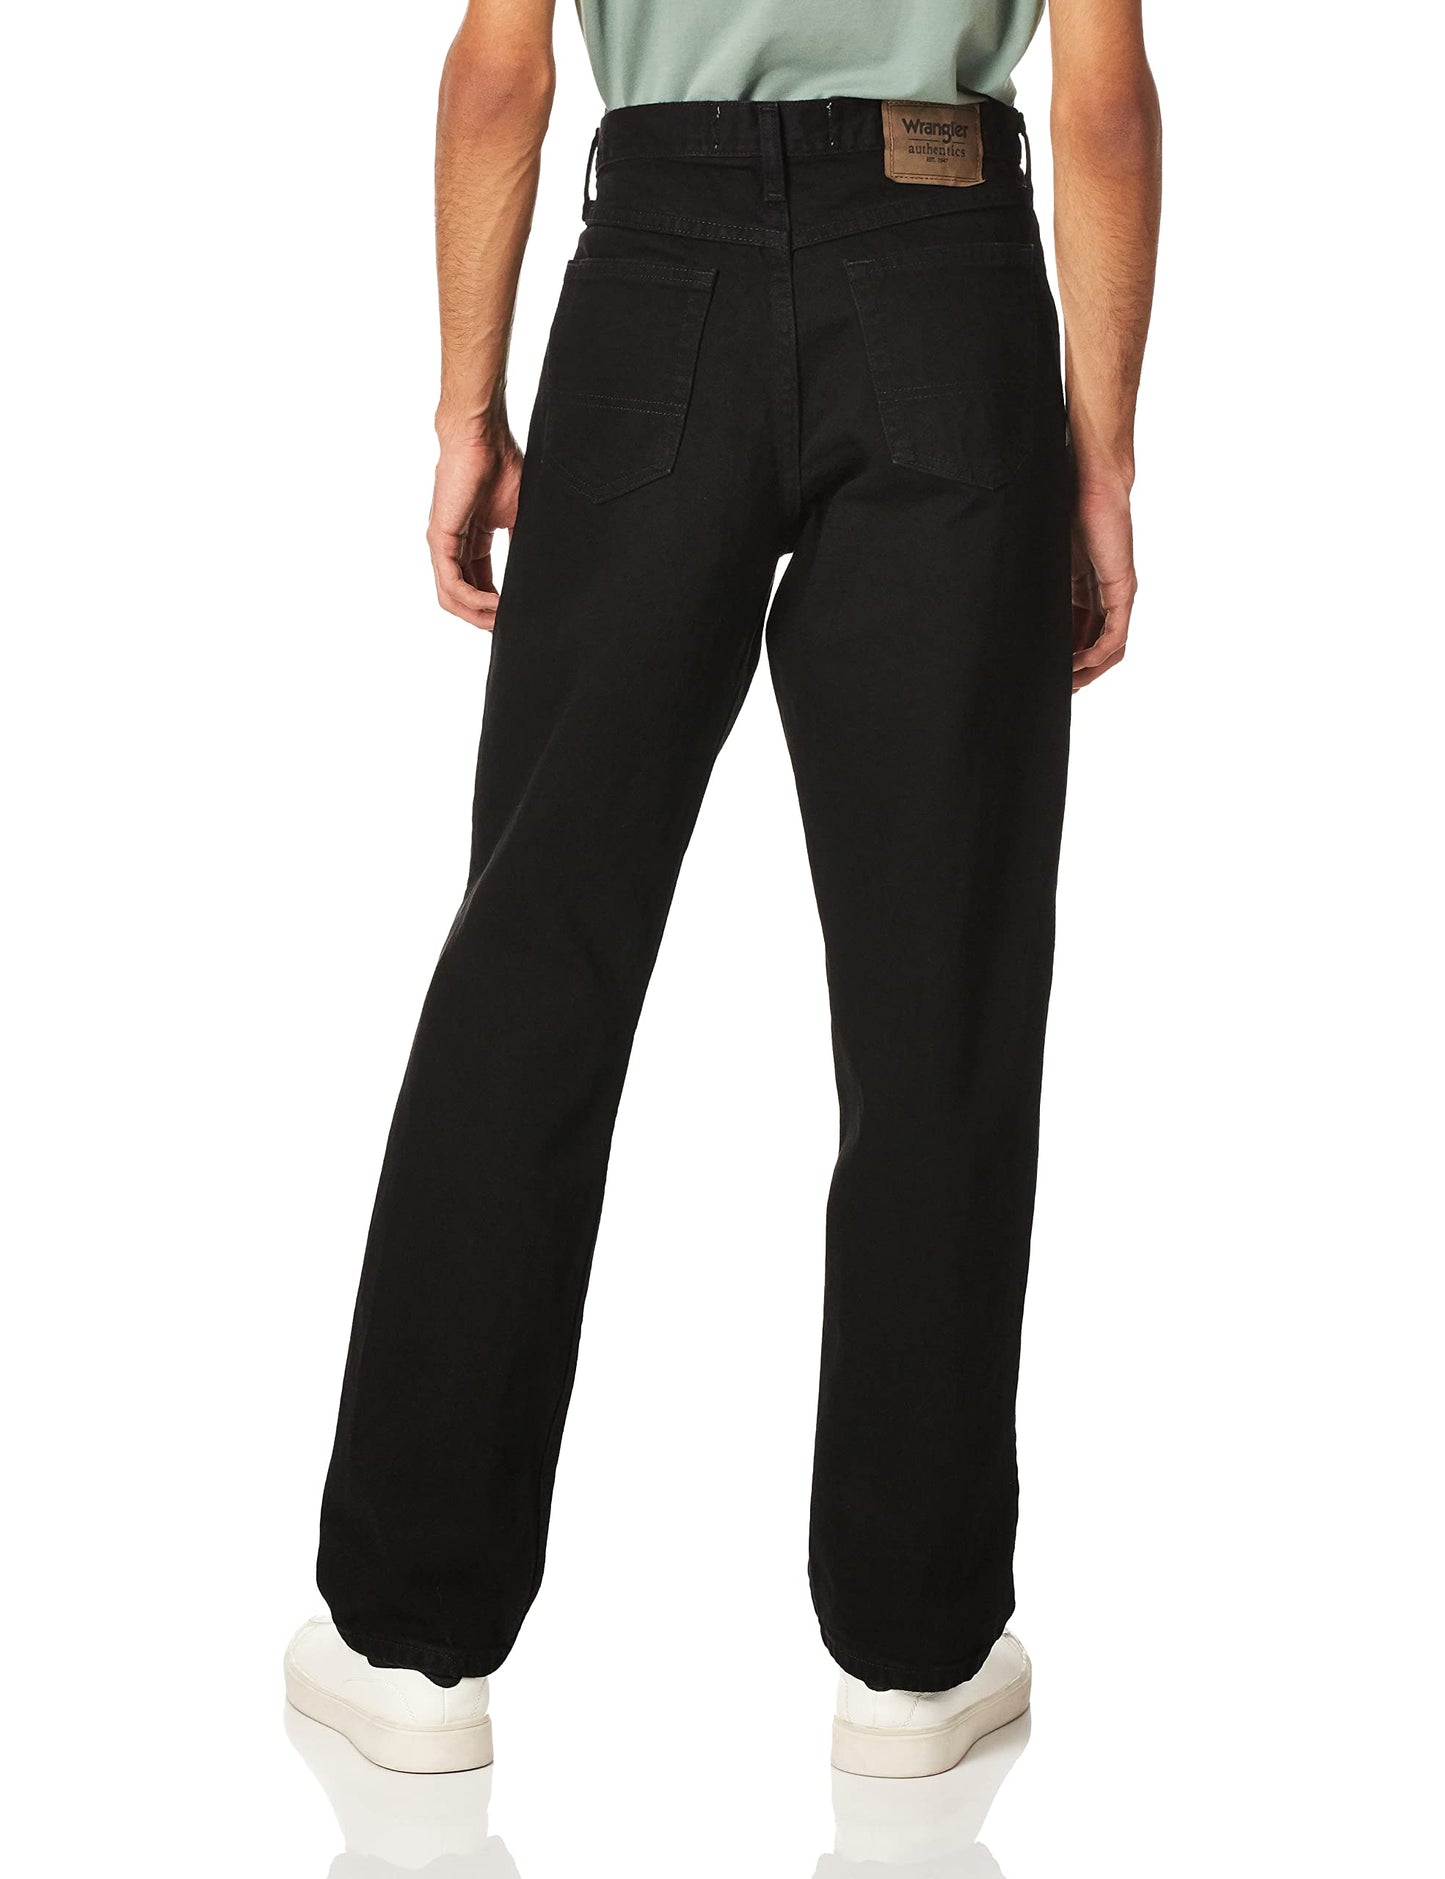 Wrangler Authentics Men's Classic 5-Pocket Relaxed Fit Cotton Jean, Black, 38W X 28L